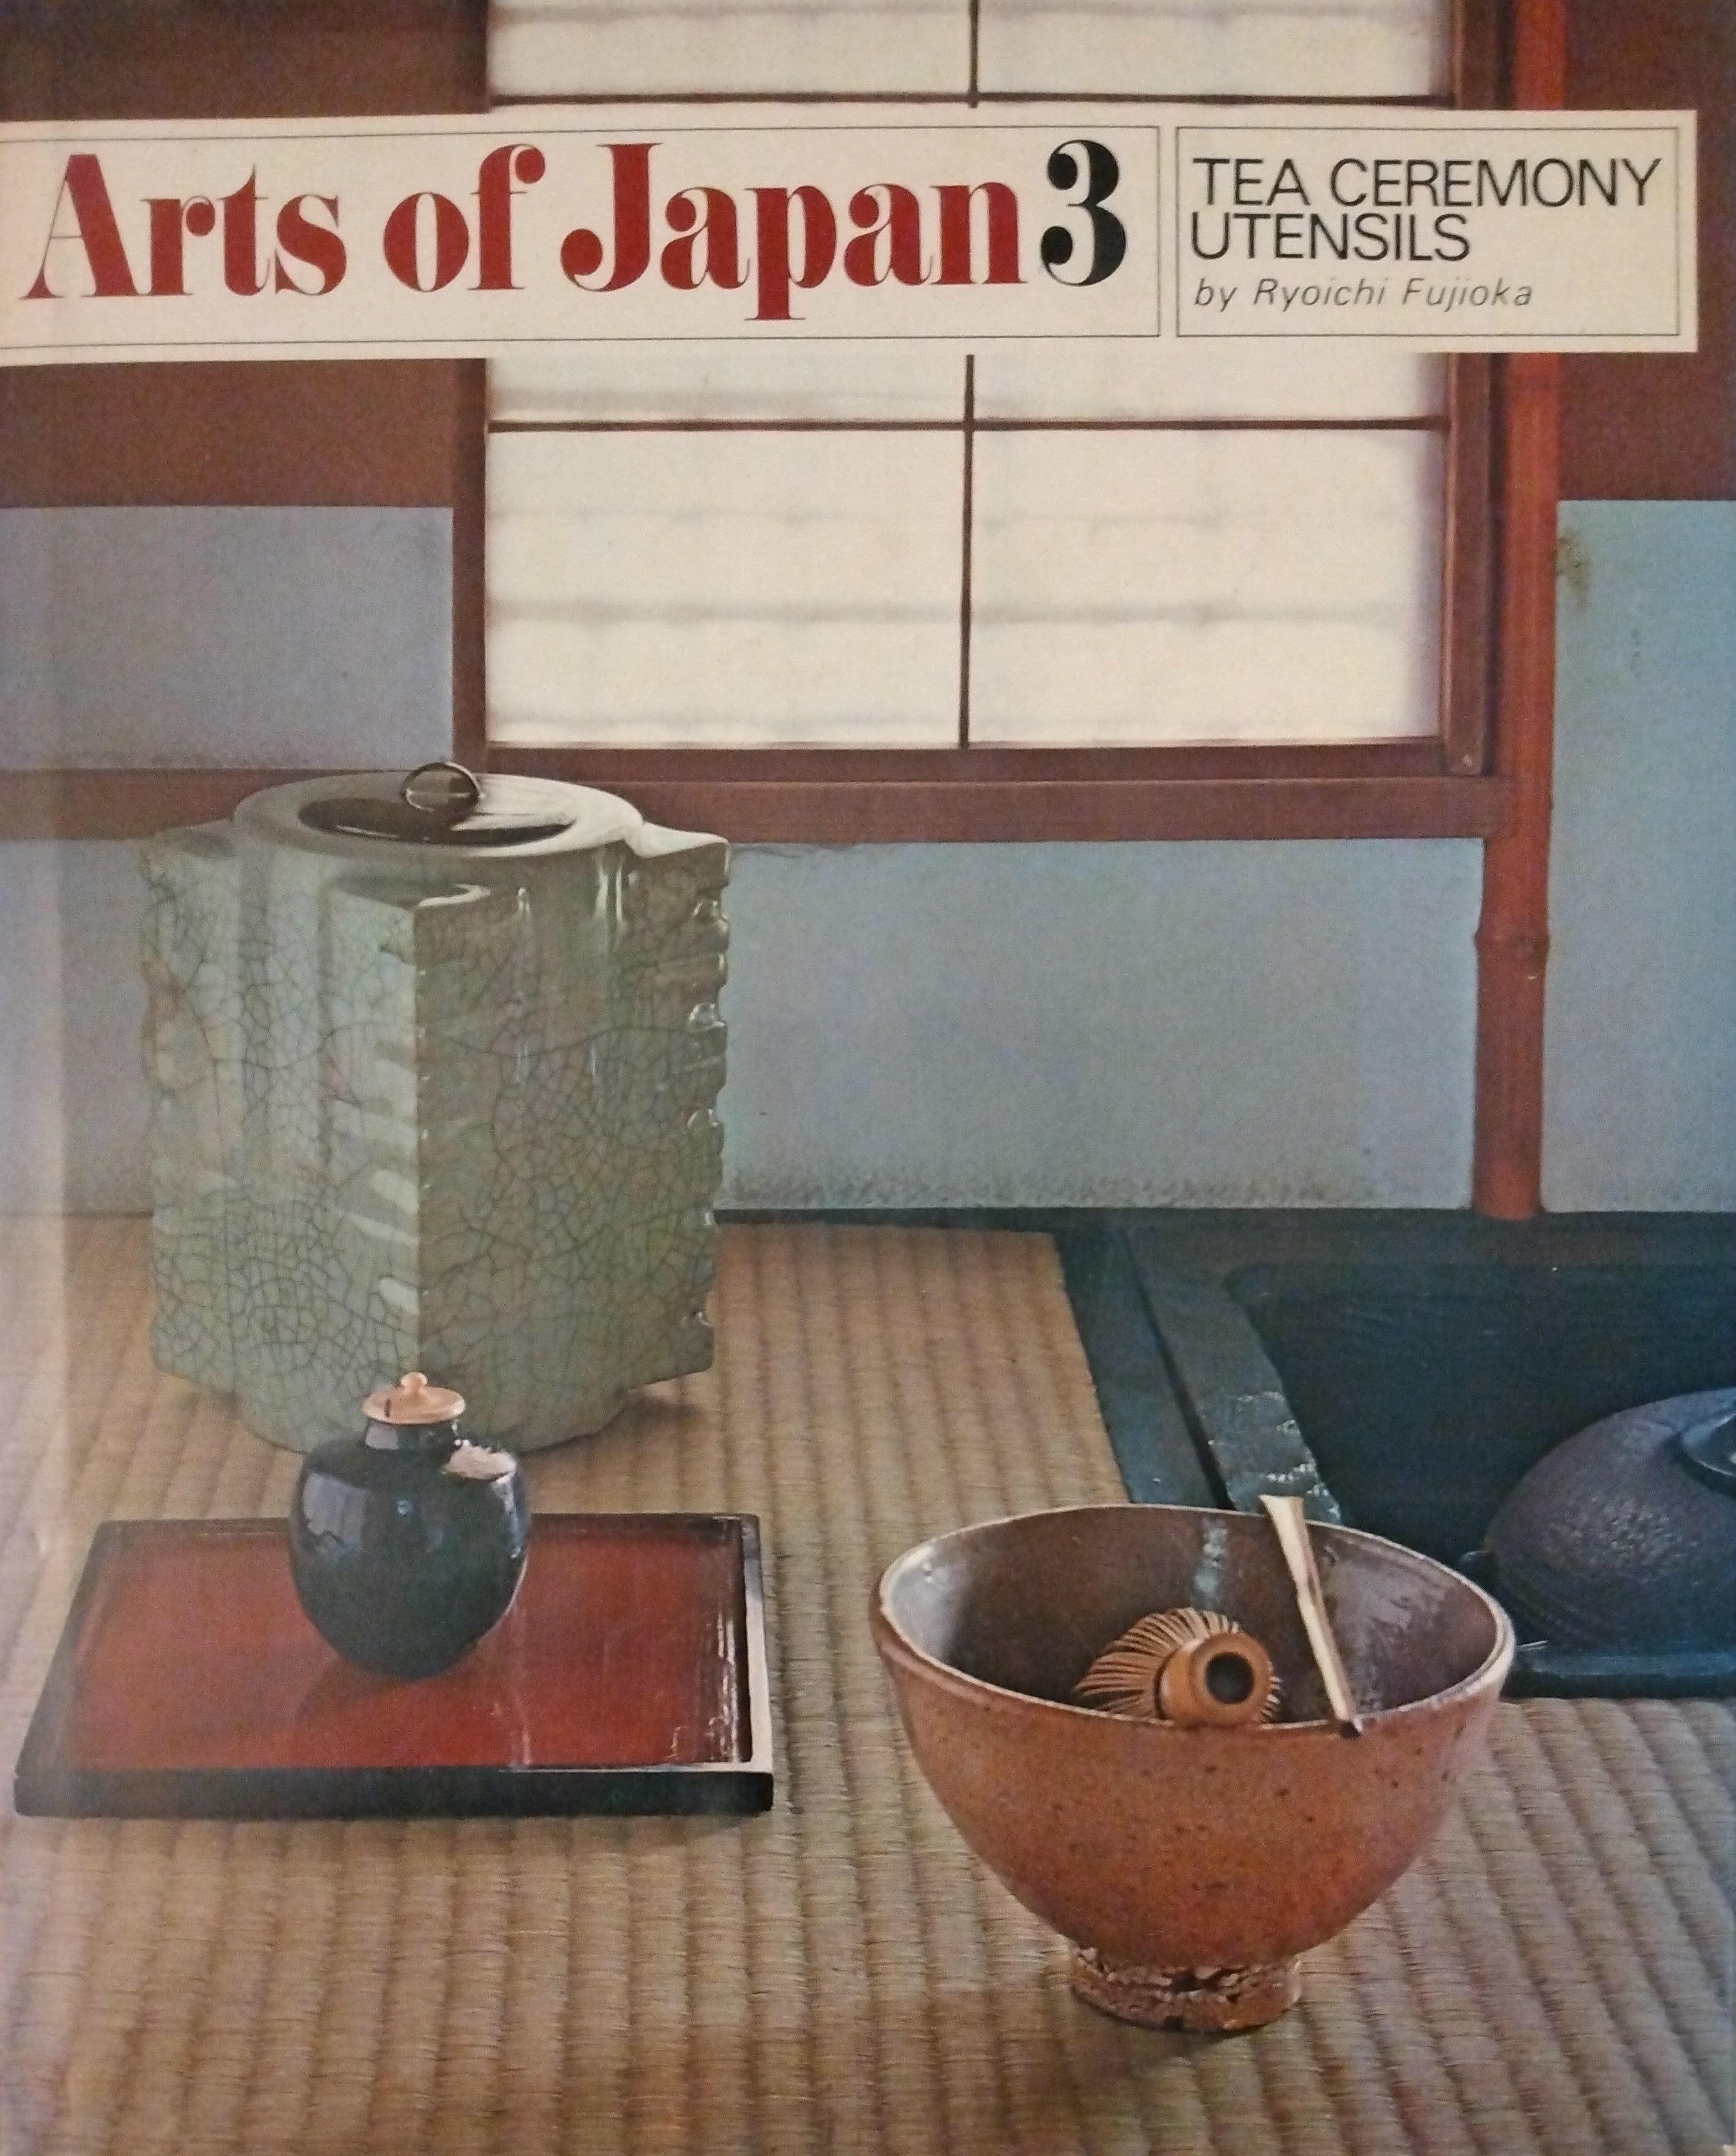 "Arts of Japan 3: Tea Ceremony Utensils", by Ryoichi Fujioka; Thiel Collection